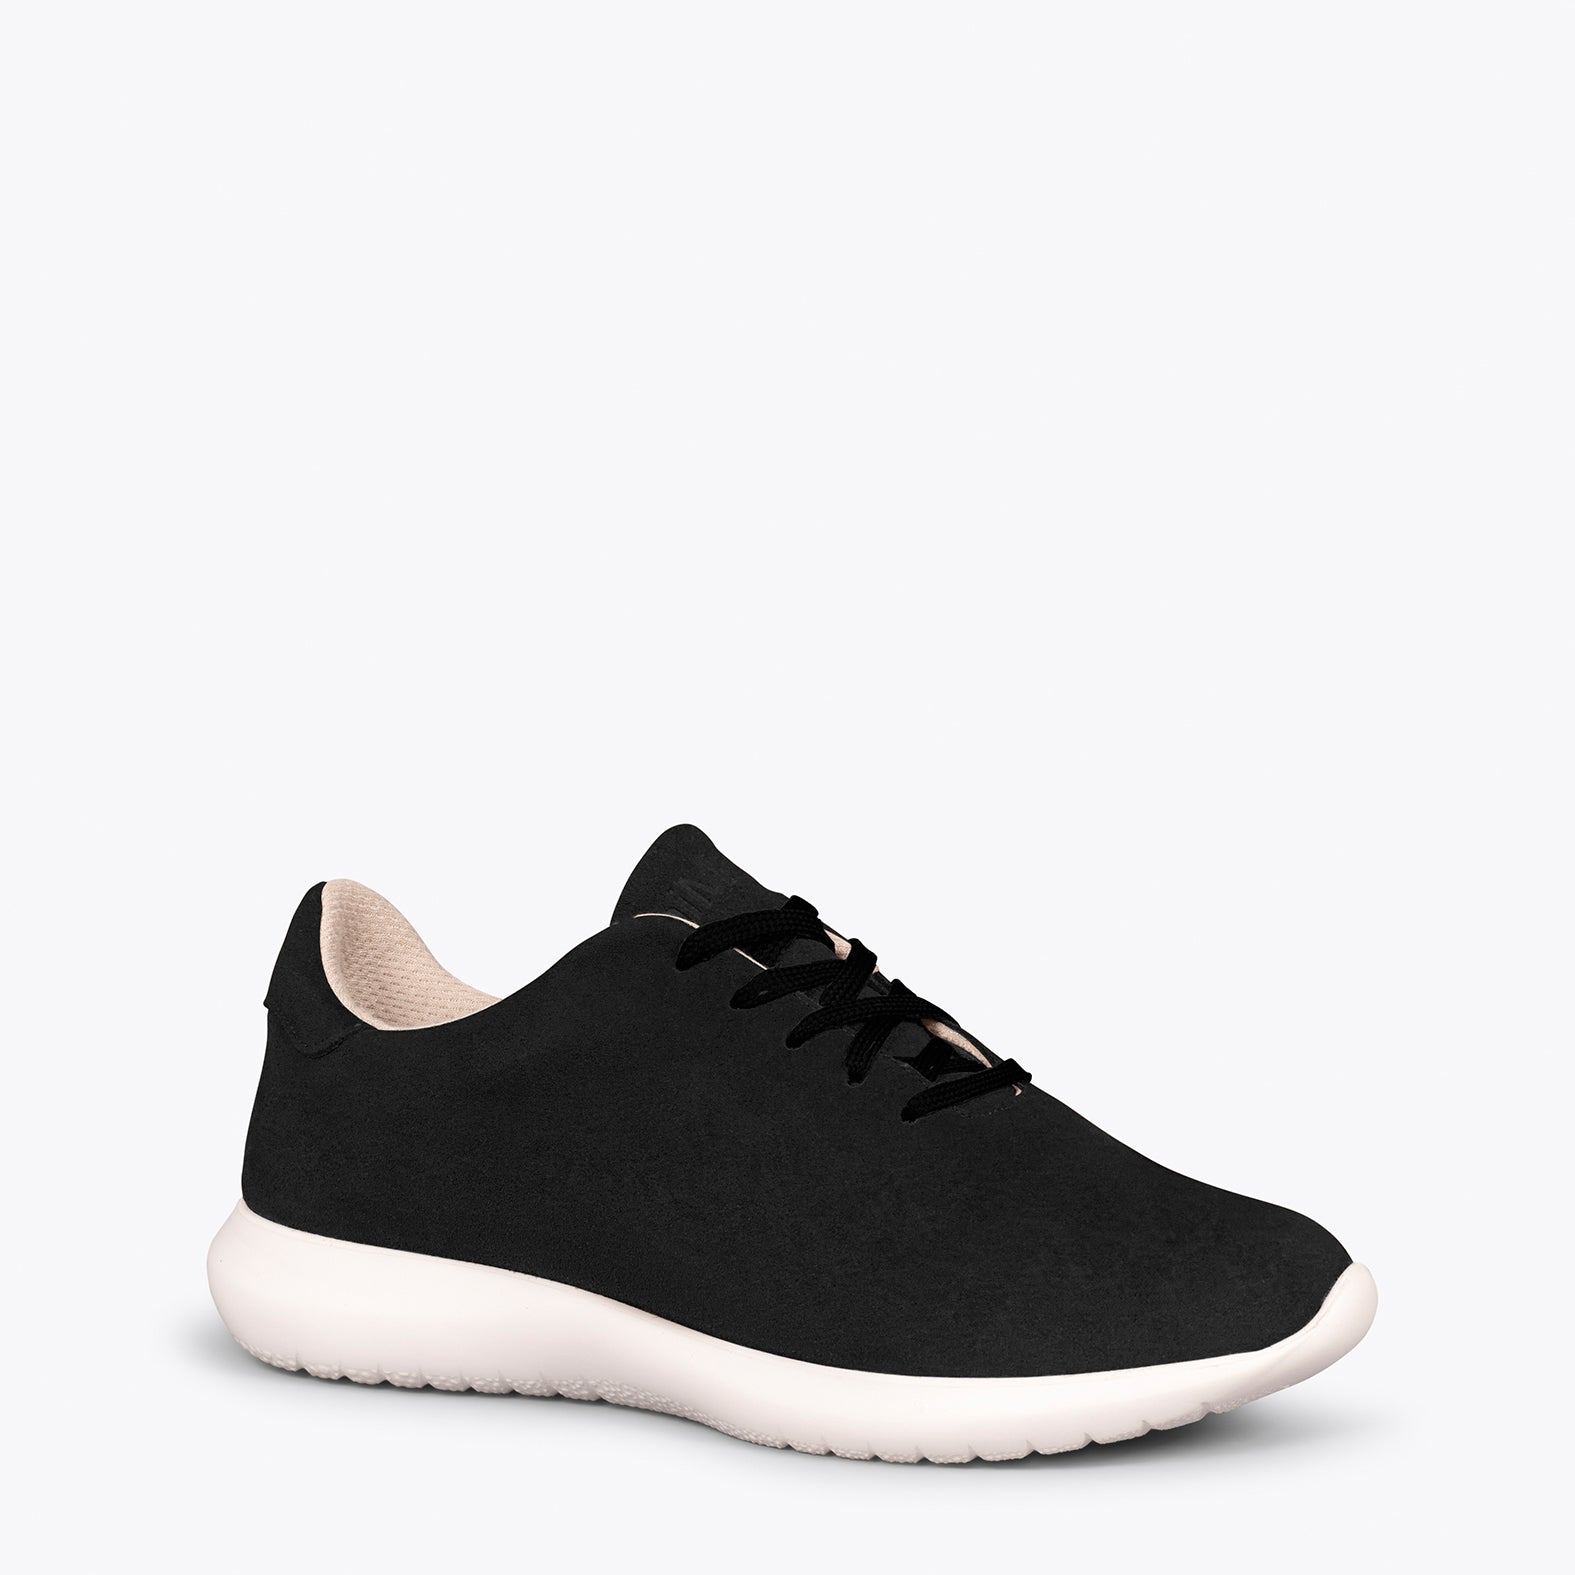 WALK – BLACK comfortable women’s sneakers